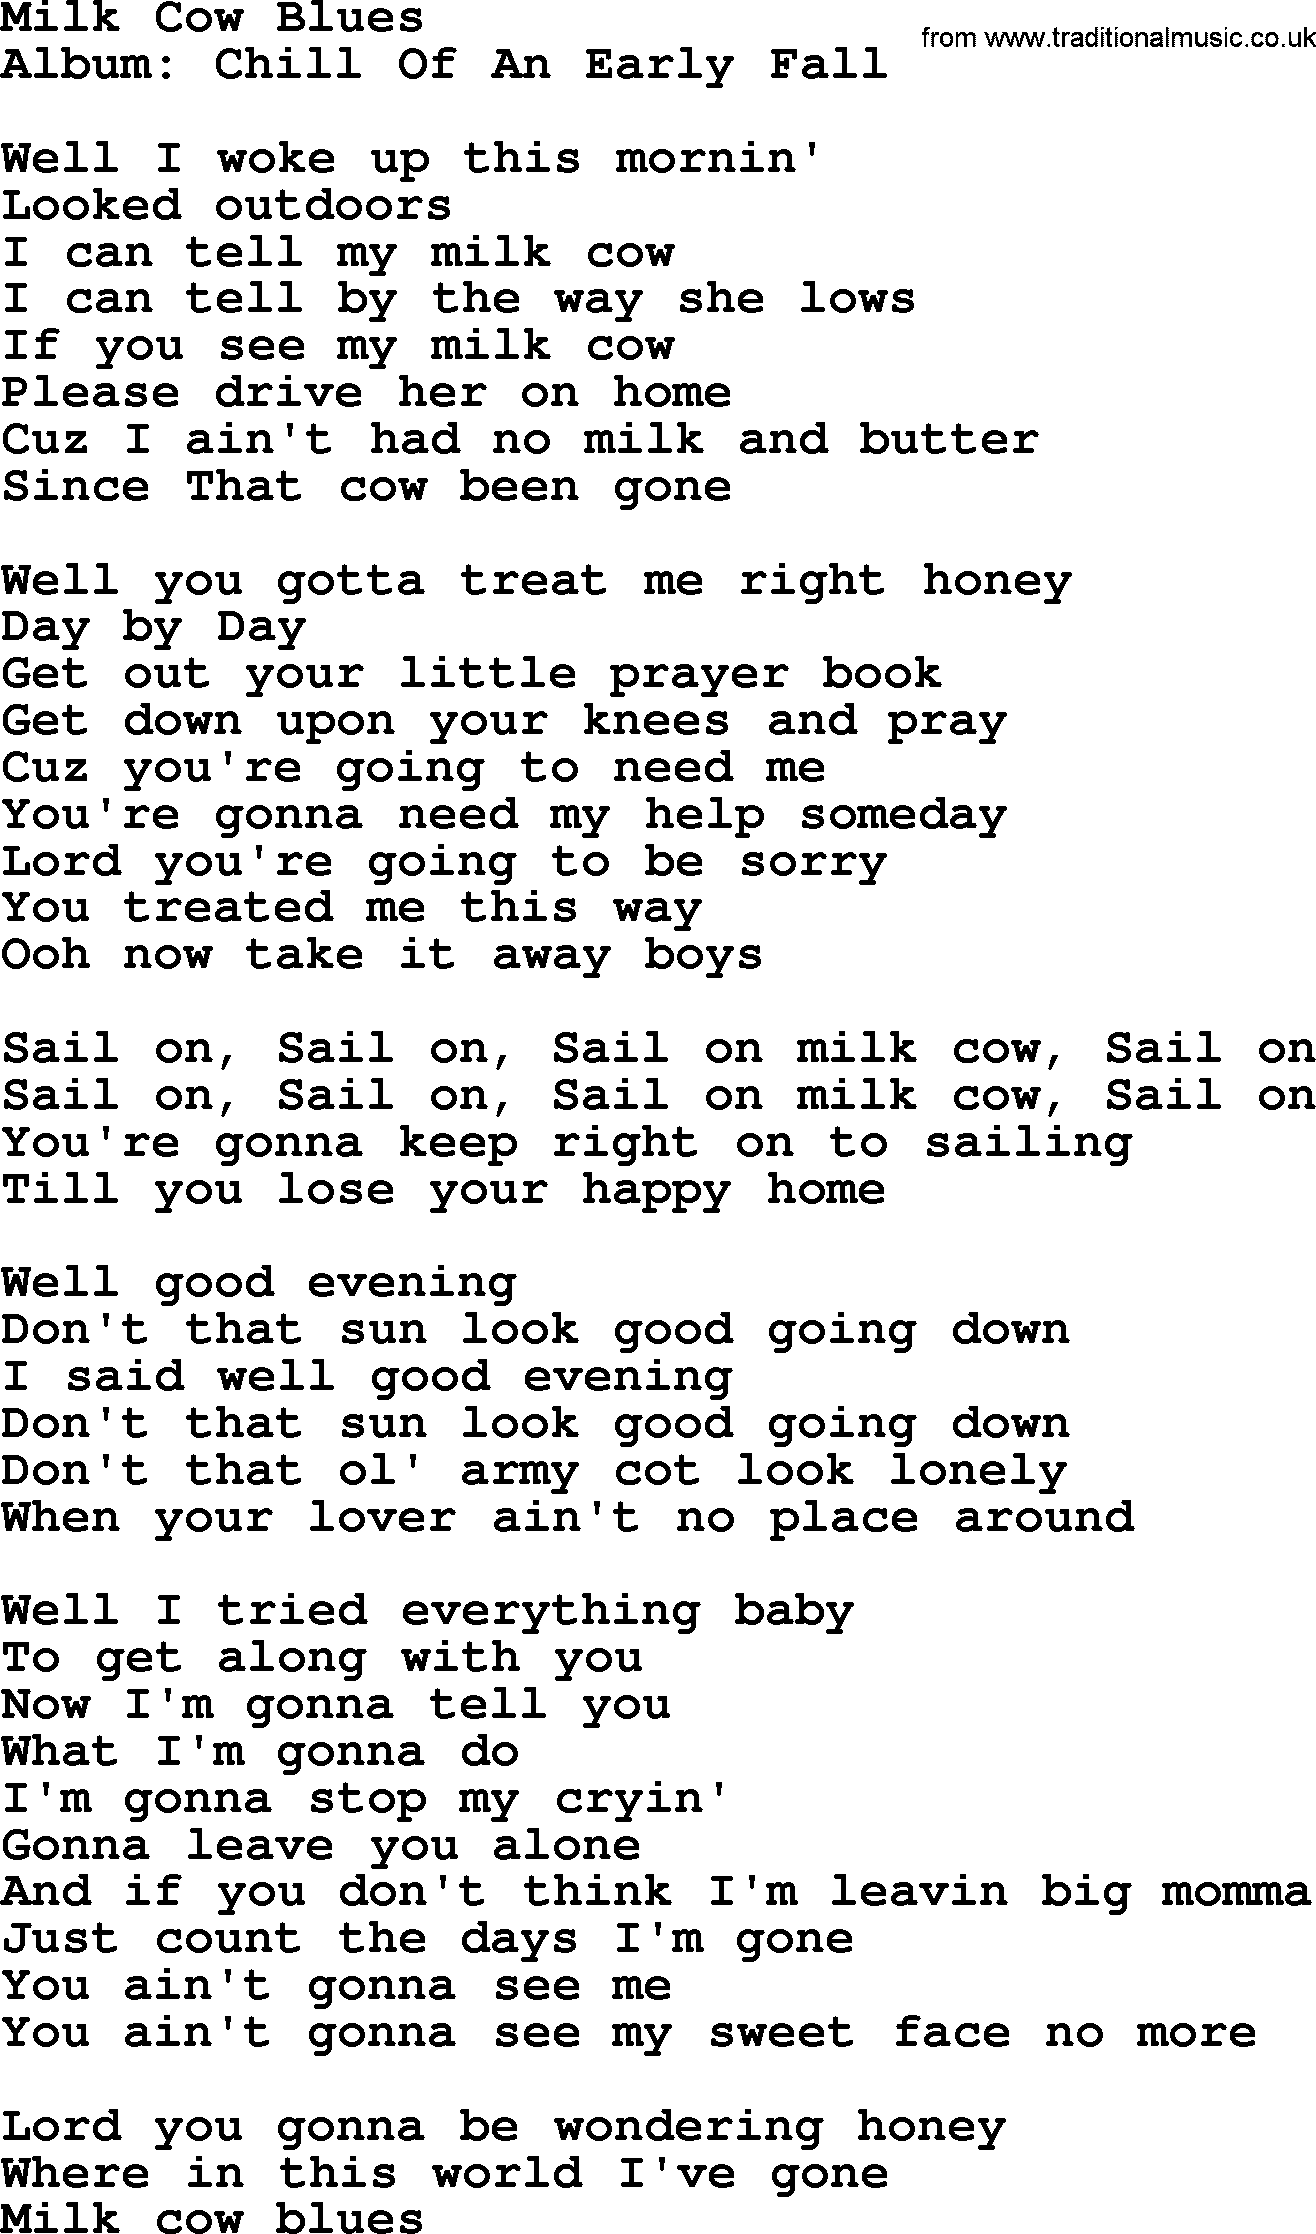 George Strait song: Milk Cow Blues, lyrics